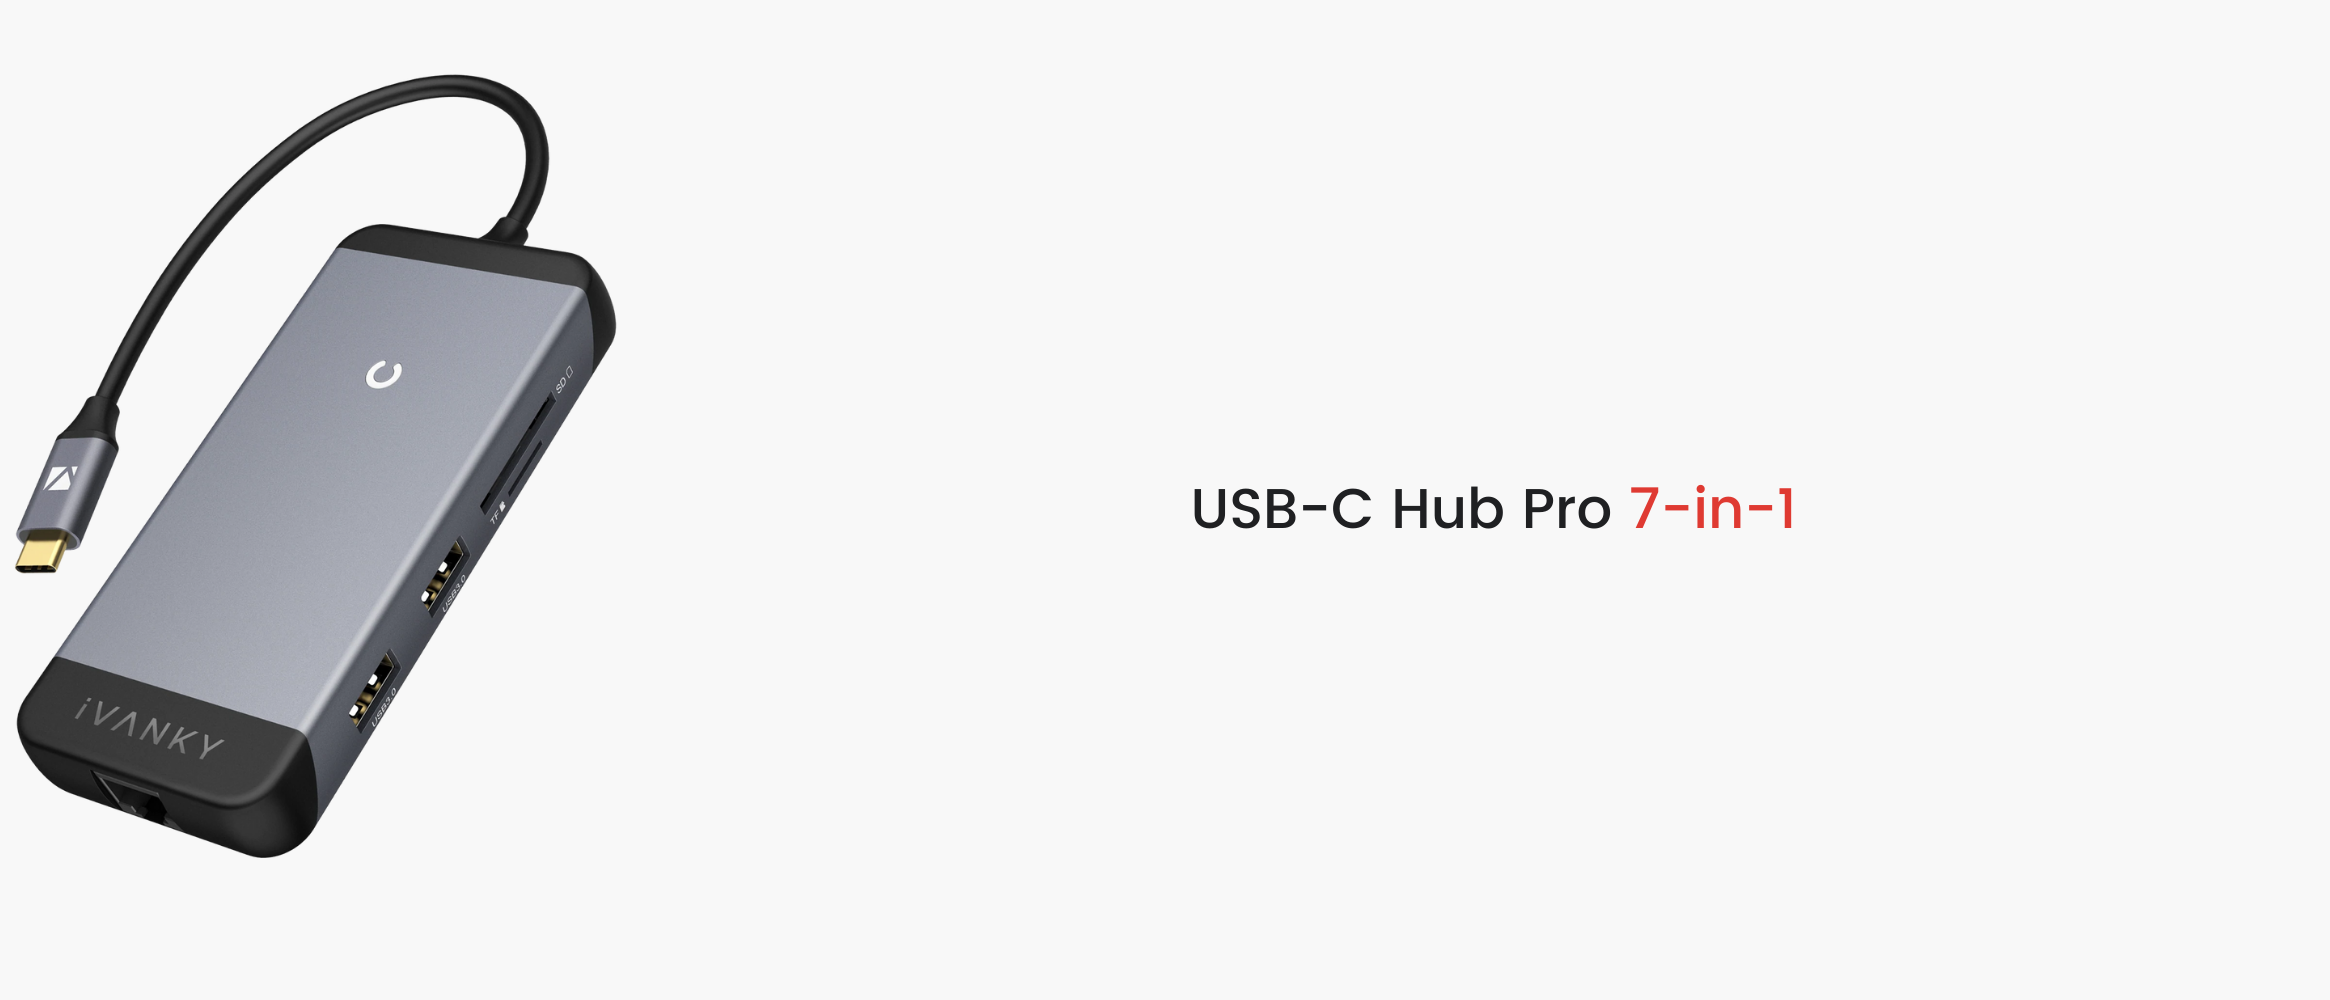 iVANKY USB-C Hub Pro 7-in-1